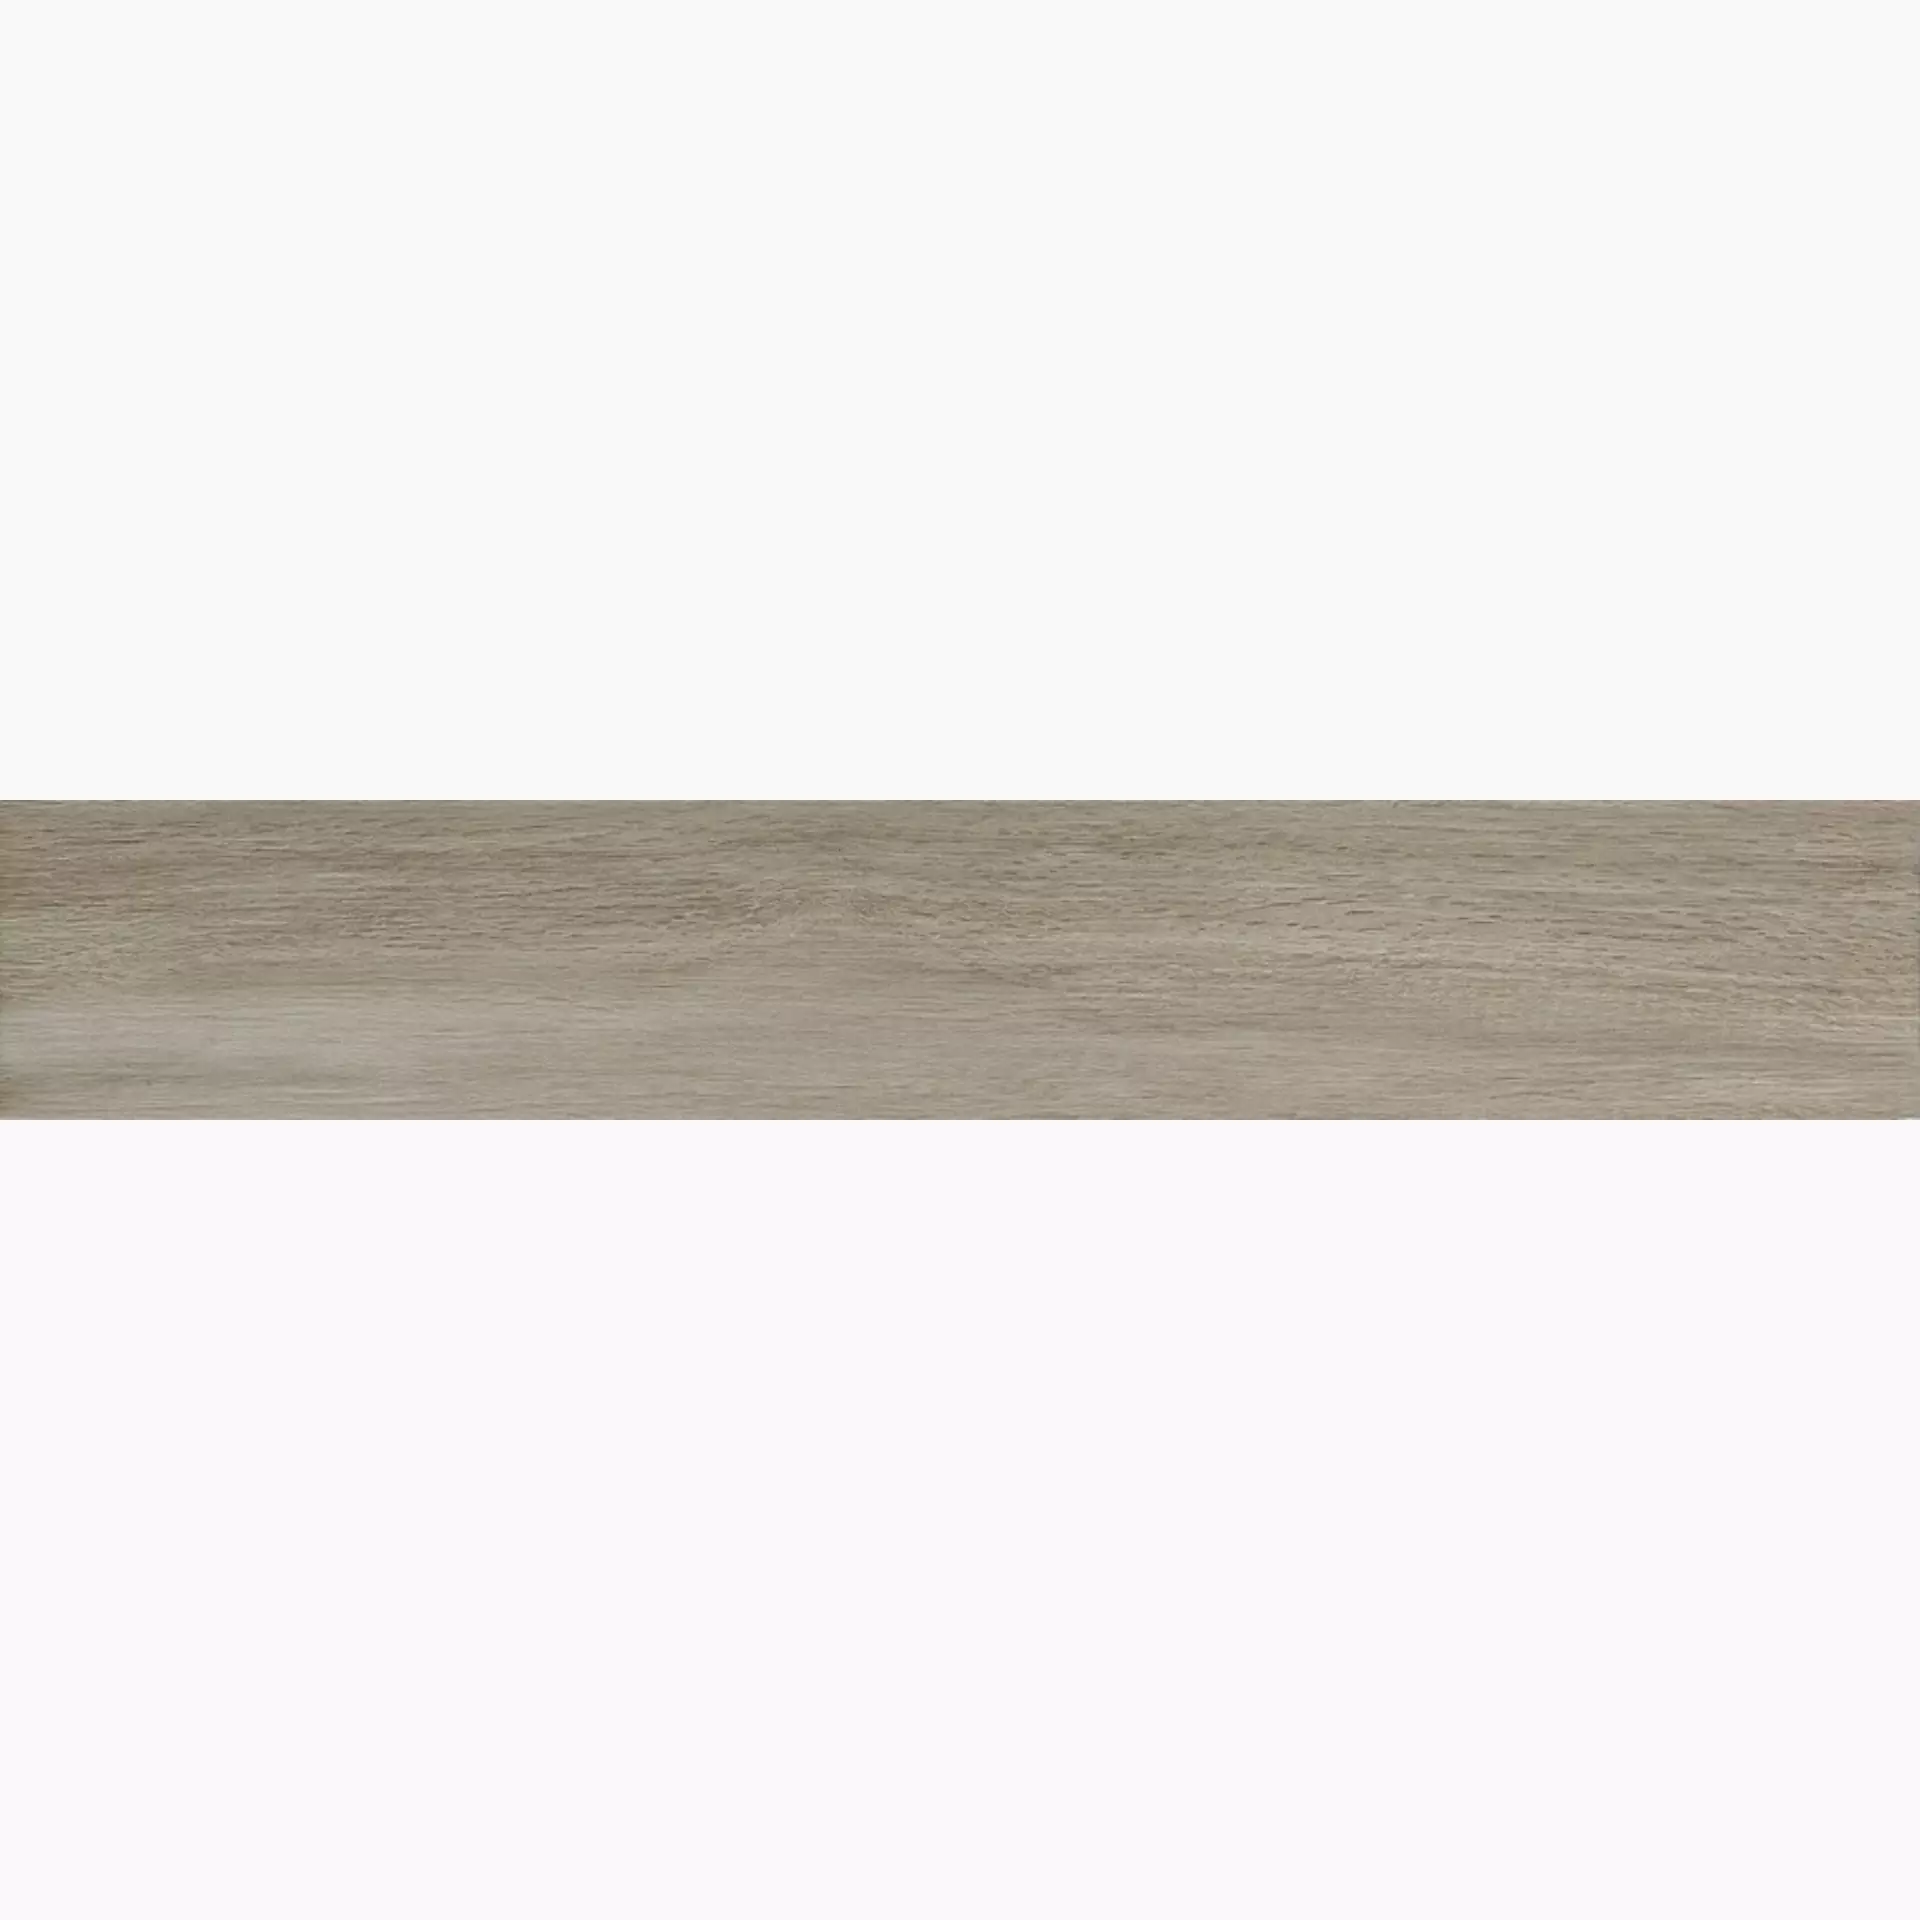 Iris E-Wood Grey Lappato Vintage 894022 15x90cm 9mm